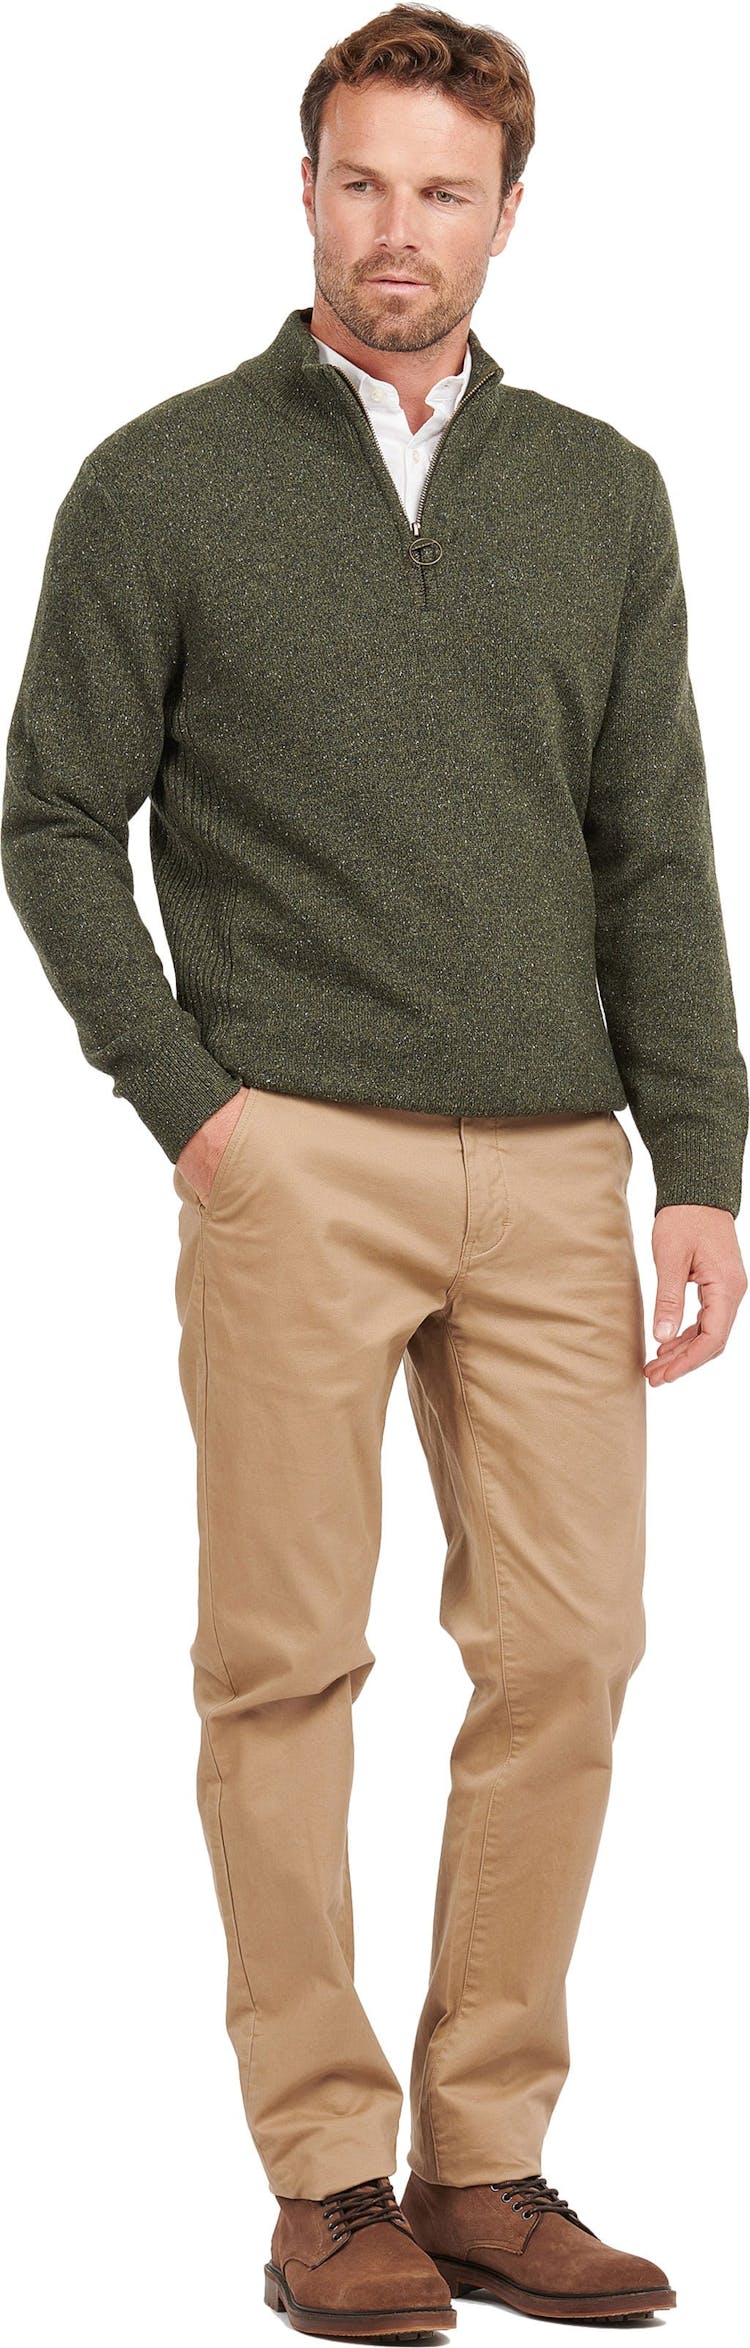 Product gallery image number 1 for product Tisbury Half Zip Sweater - Men's